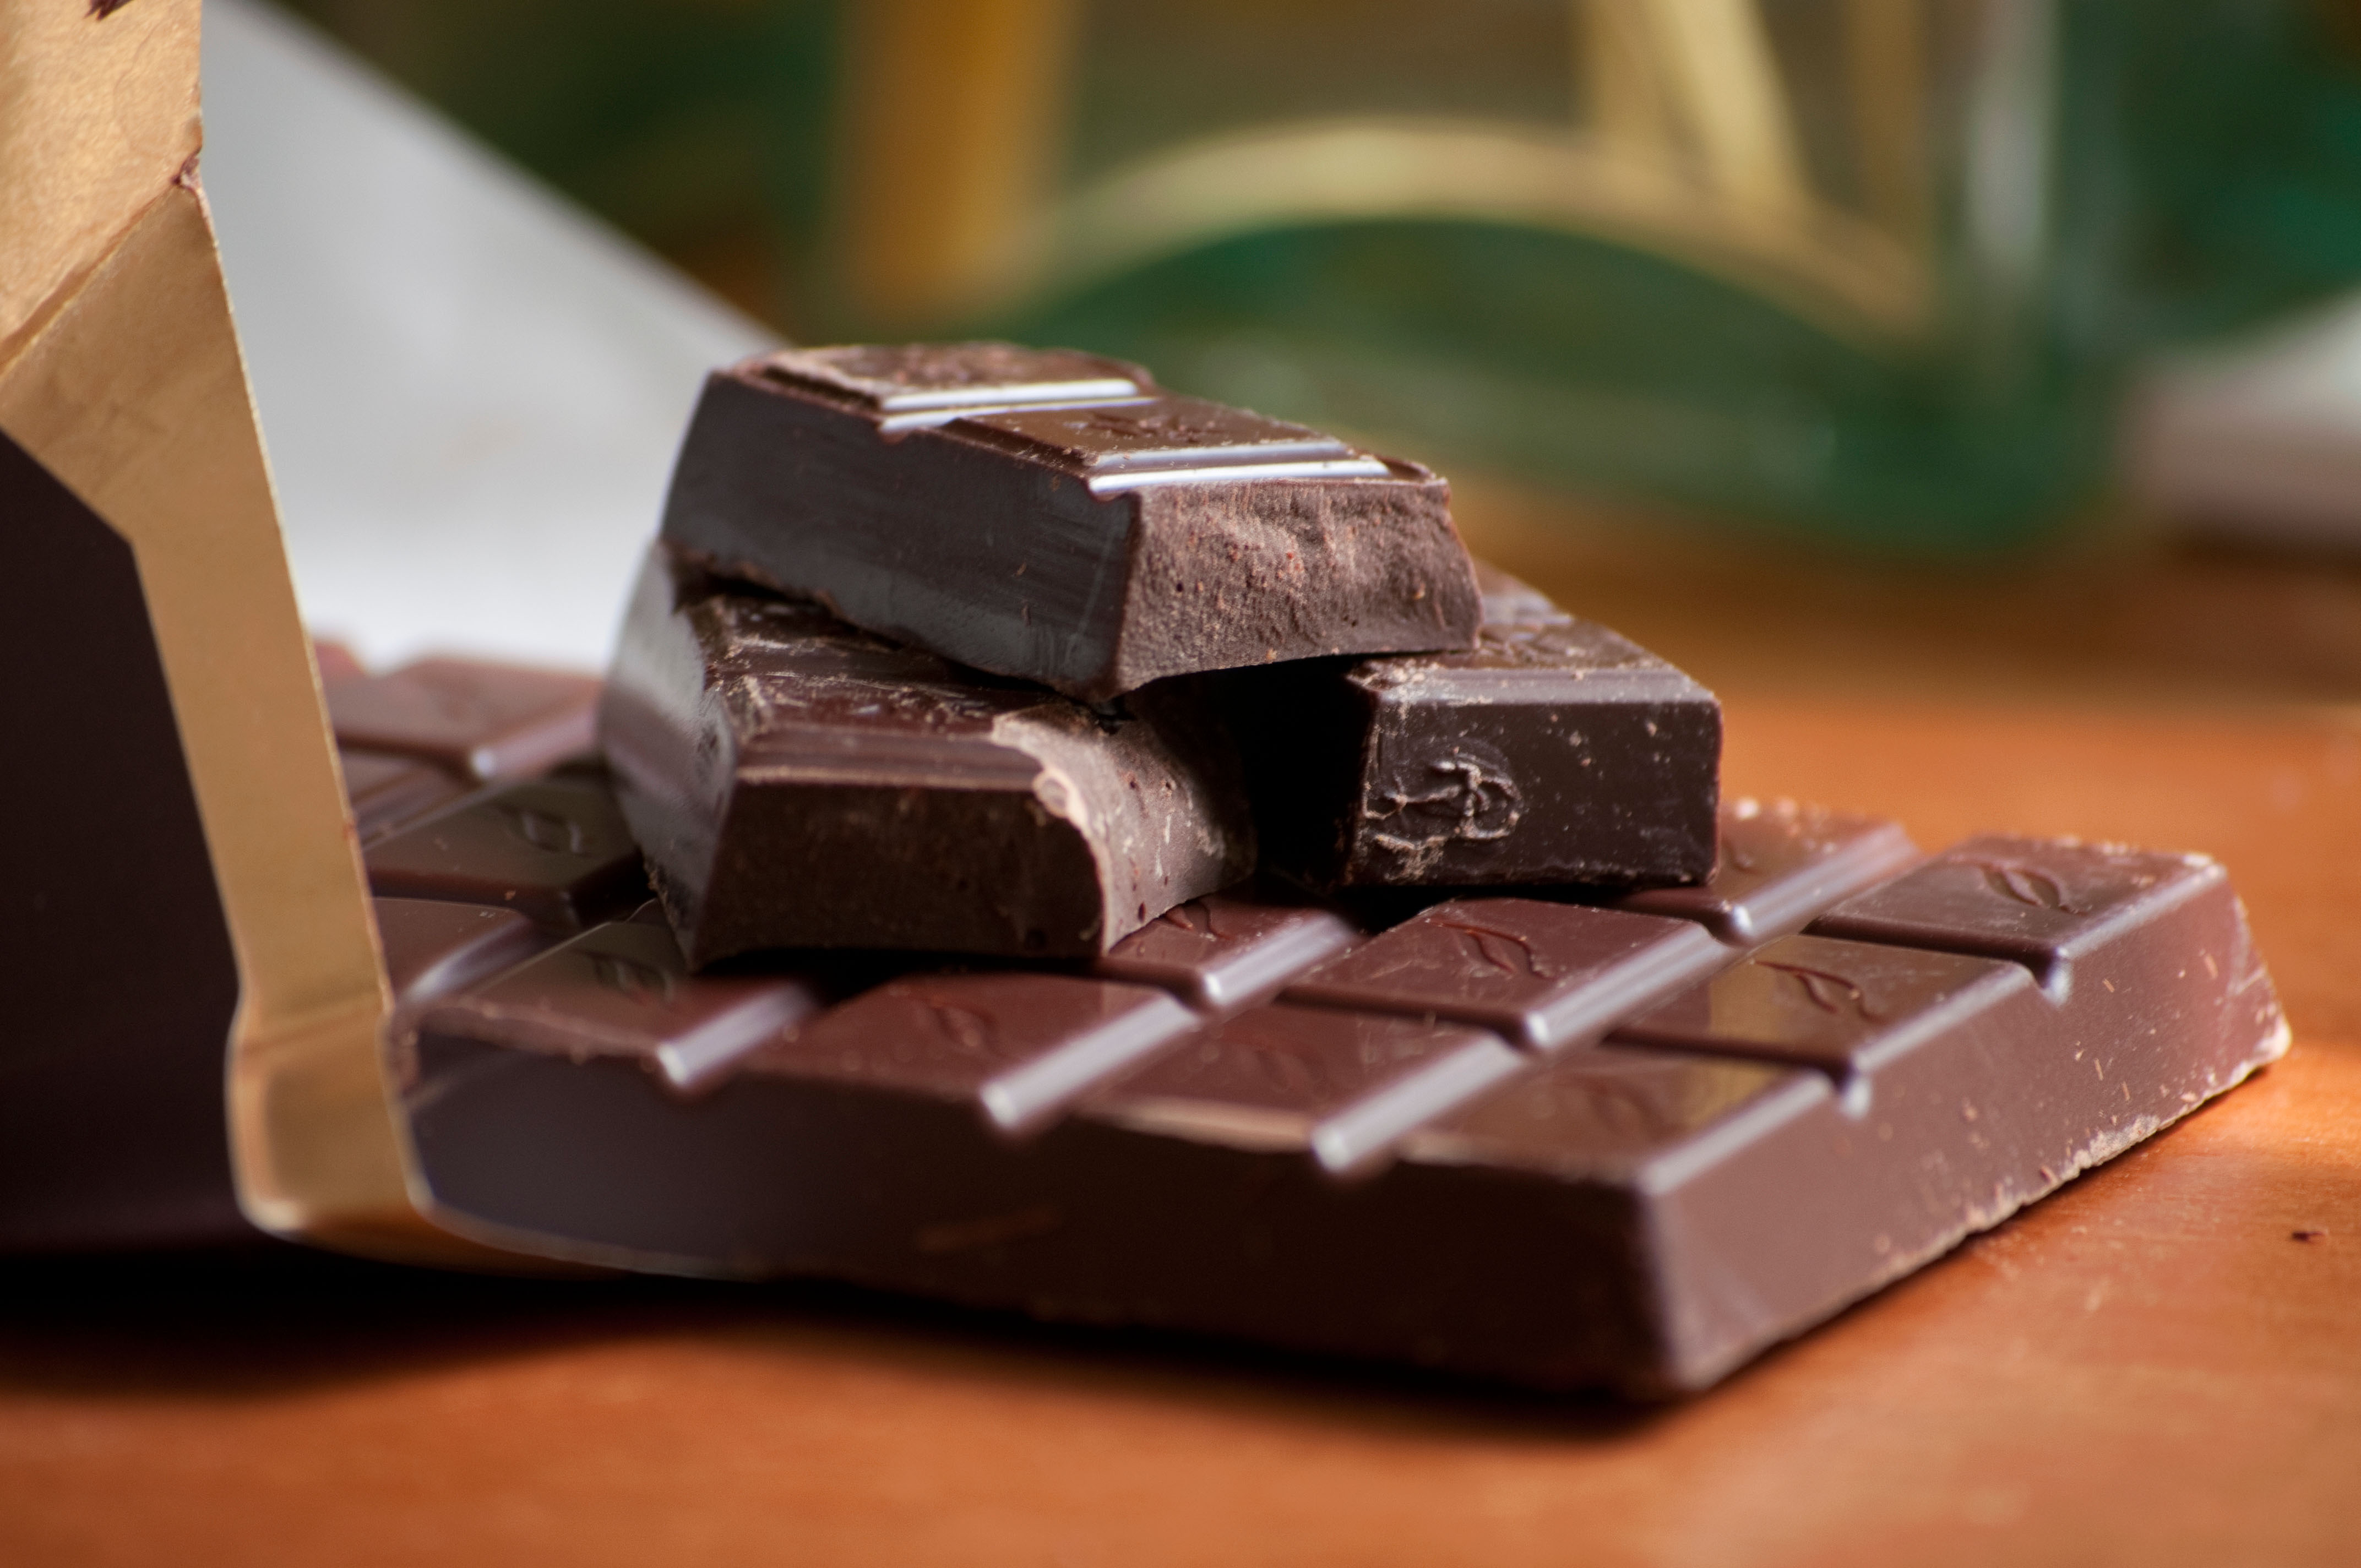 Dark chocolate has more cocoa than milk chocolate